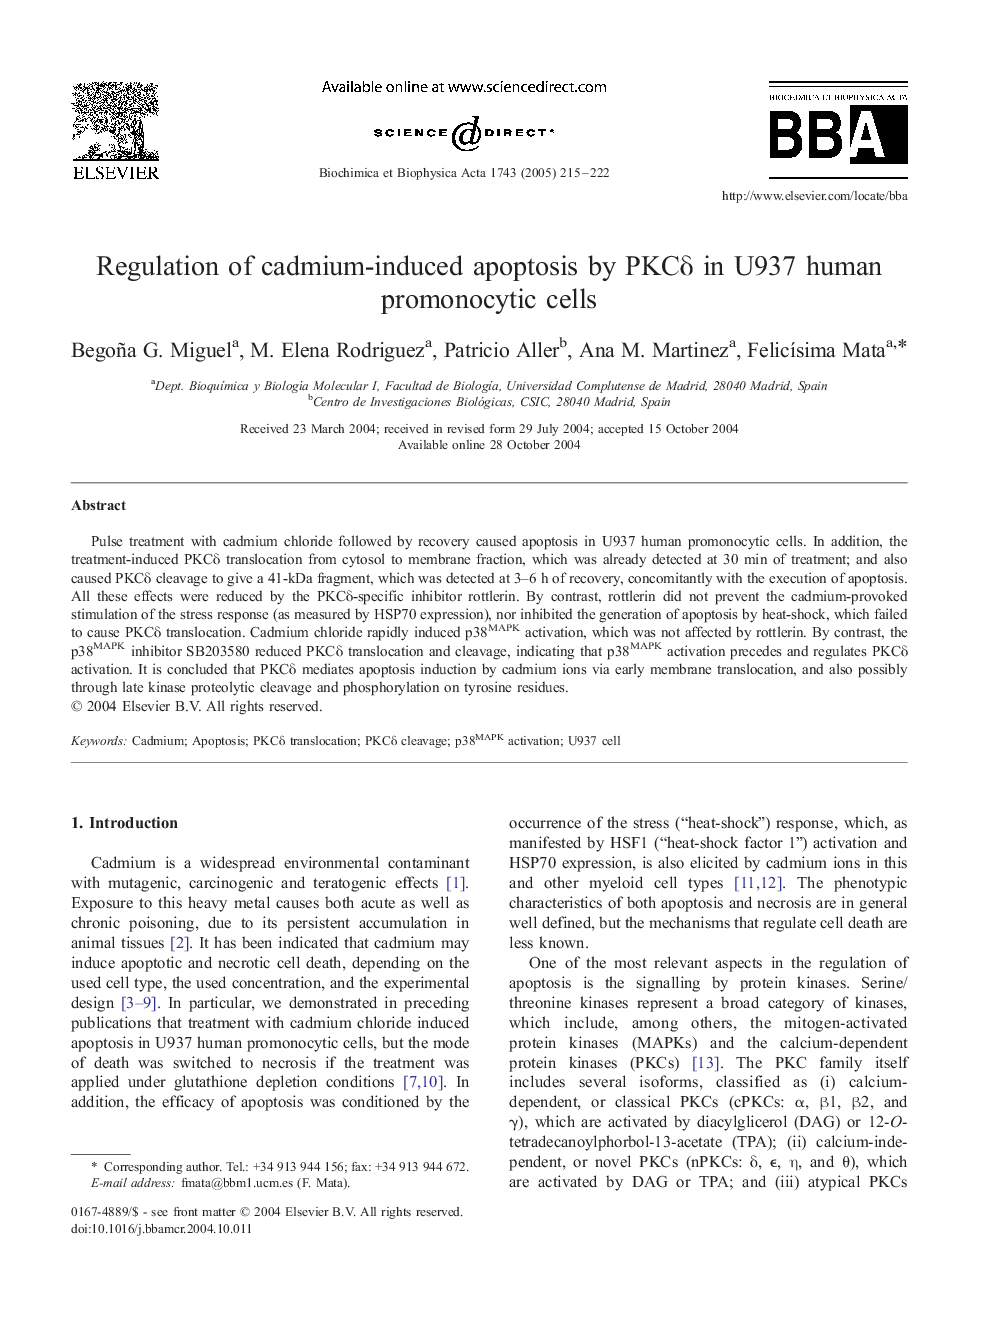 Regulation of cadmium-induced apoptosis by PKCÎ´ in U937 human promonocytic cells